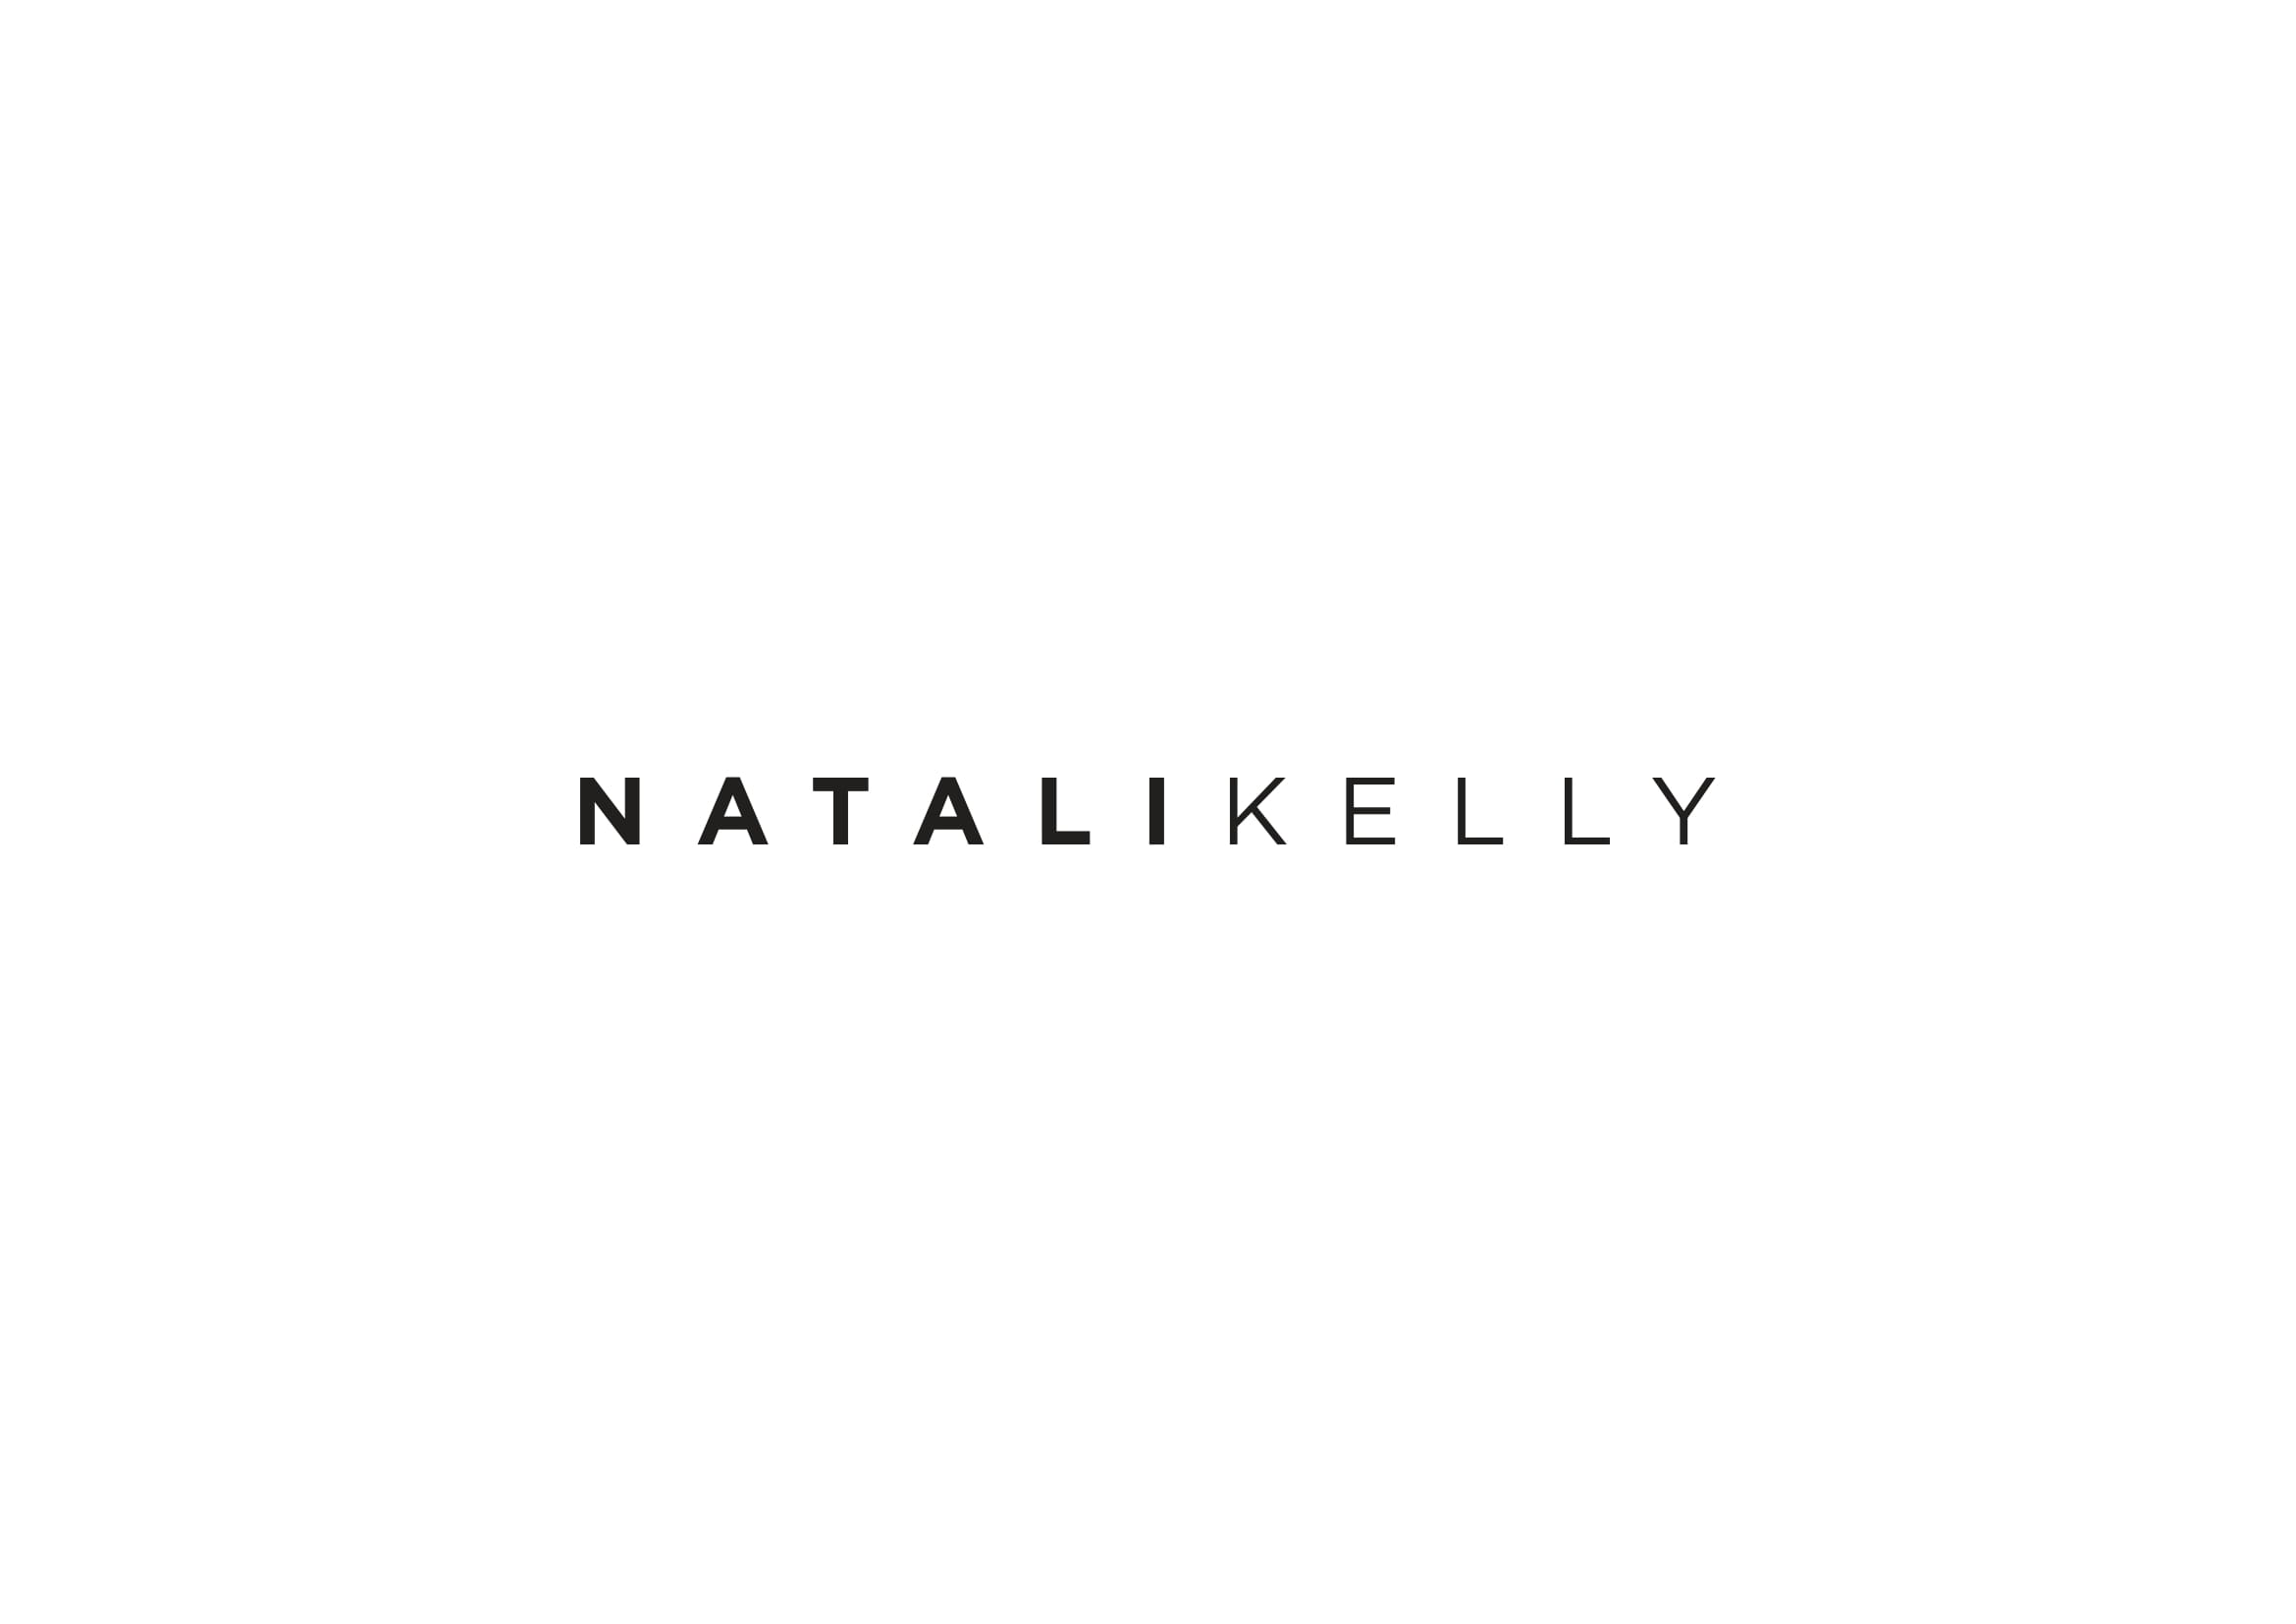 Natali Kelly